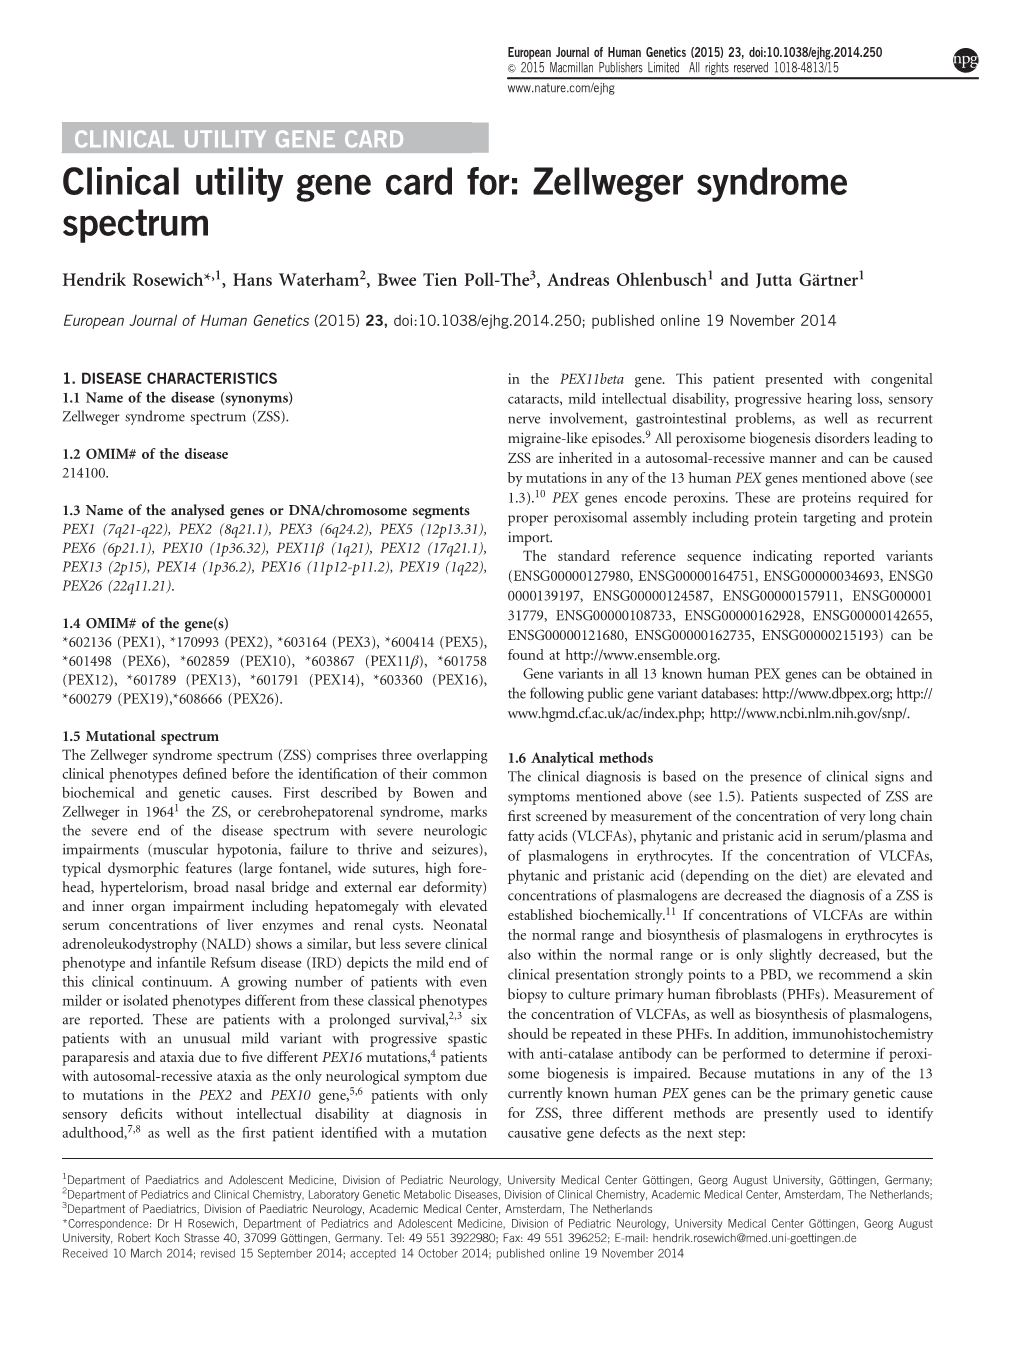 Zellweger Syndrome Spectrum